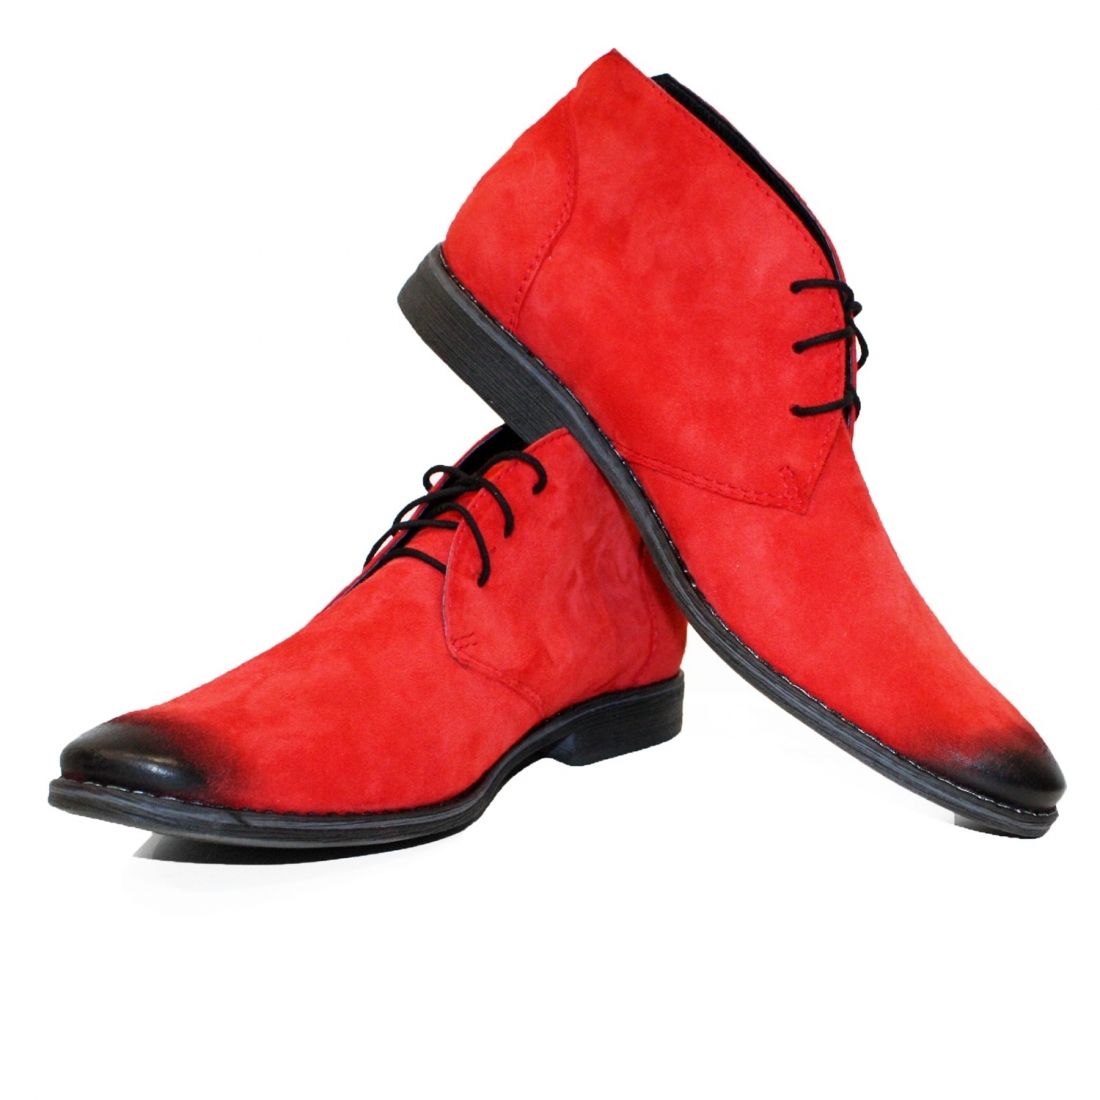 Modello Huzzello - Chukka Botas - Handmade Colorful Italian Leather Shoes